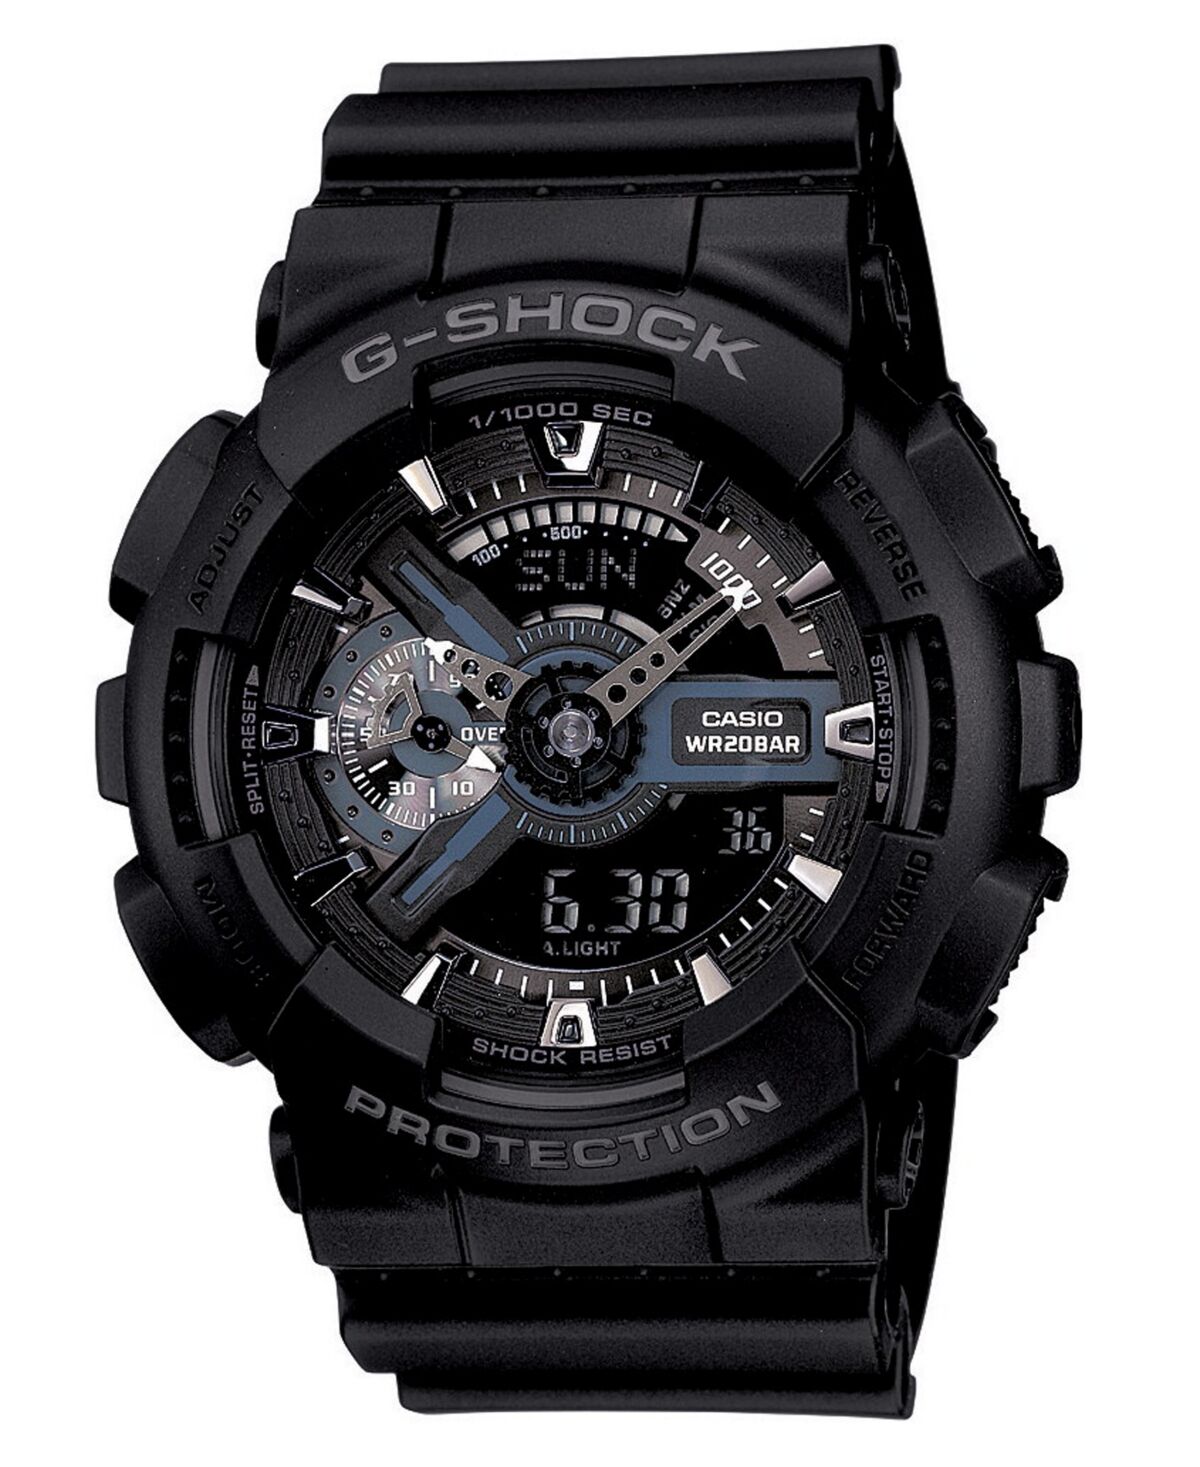 G-Shock Men's Analog Digital Black Resin Strap Watch, 55mm GA110-1B - Black